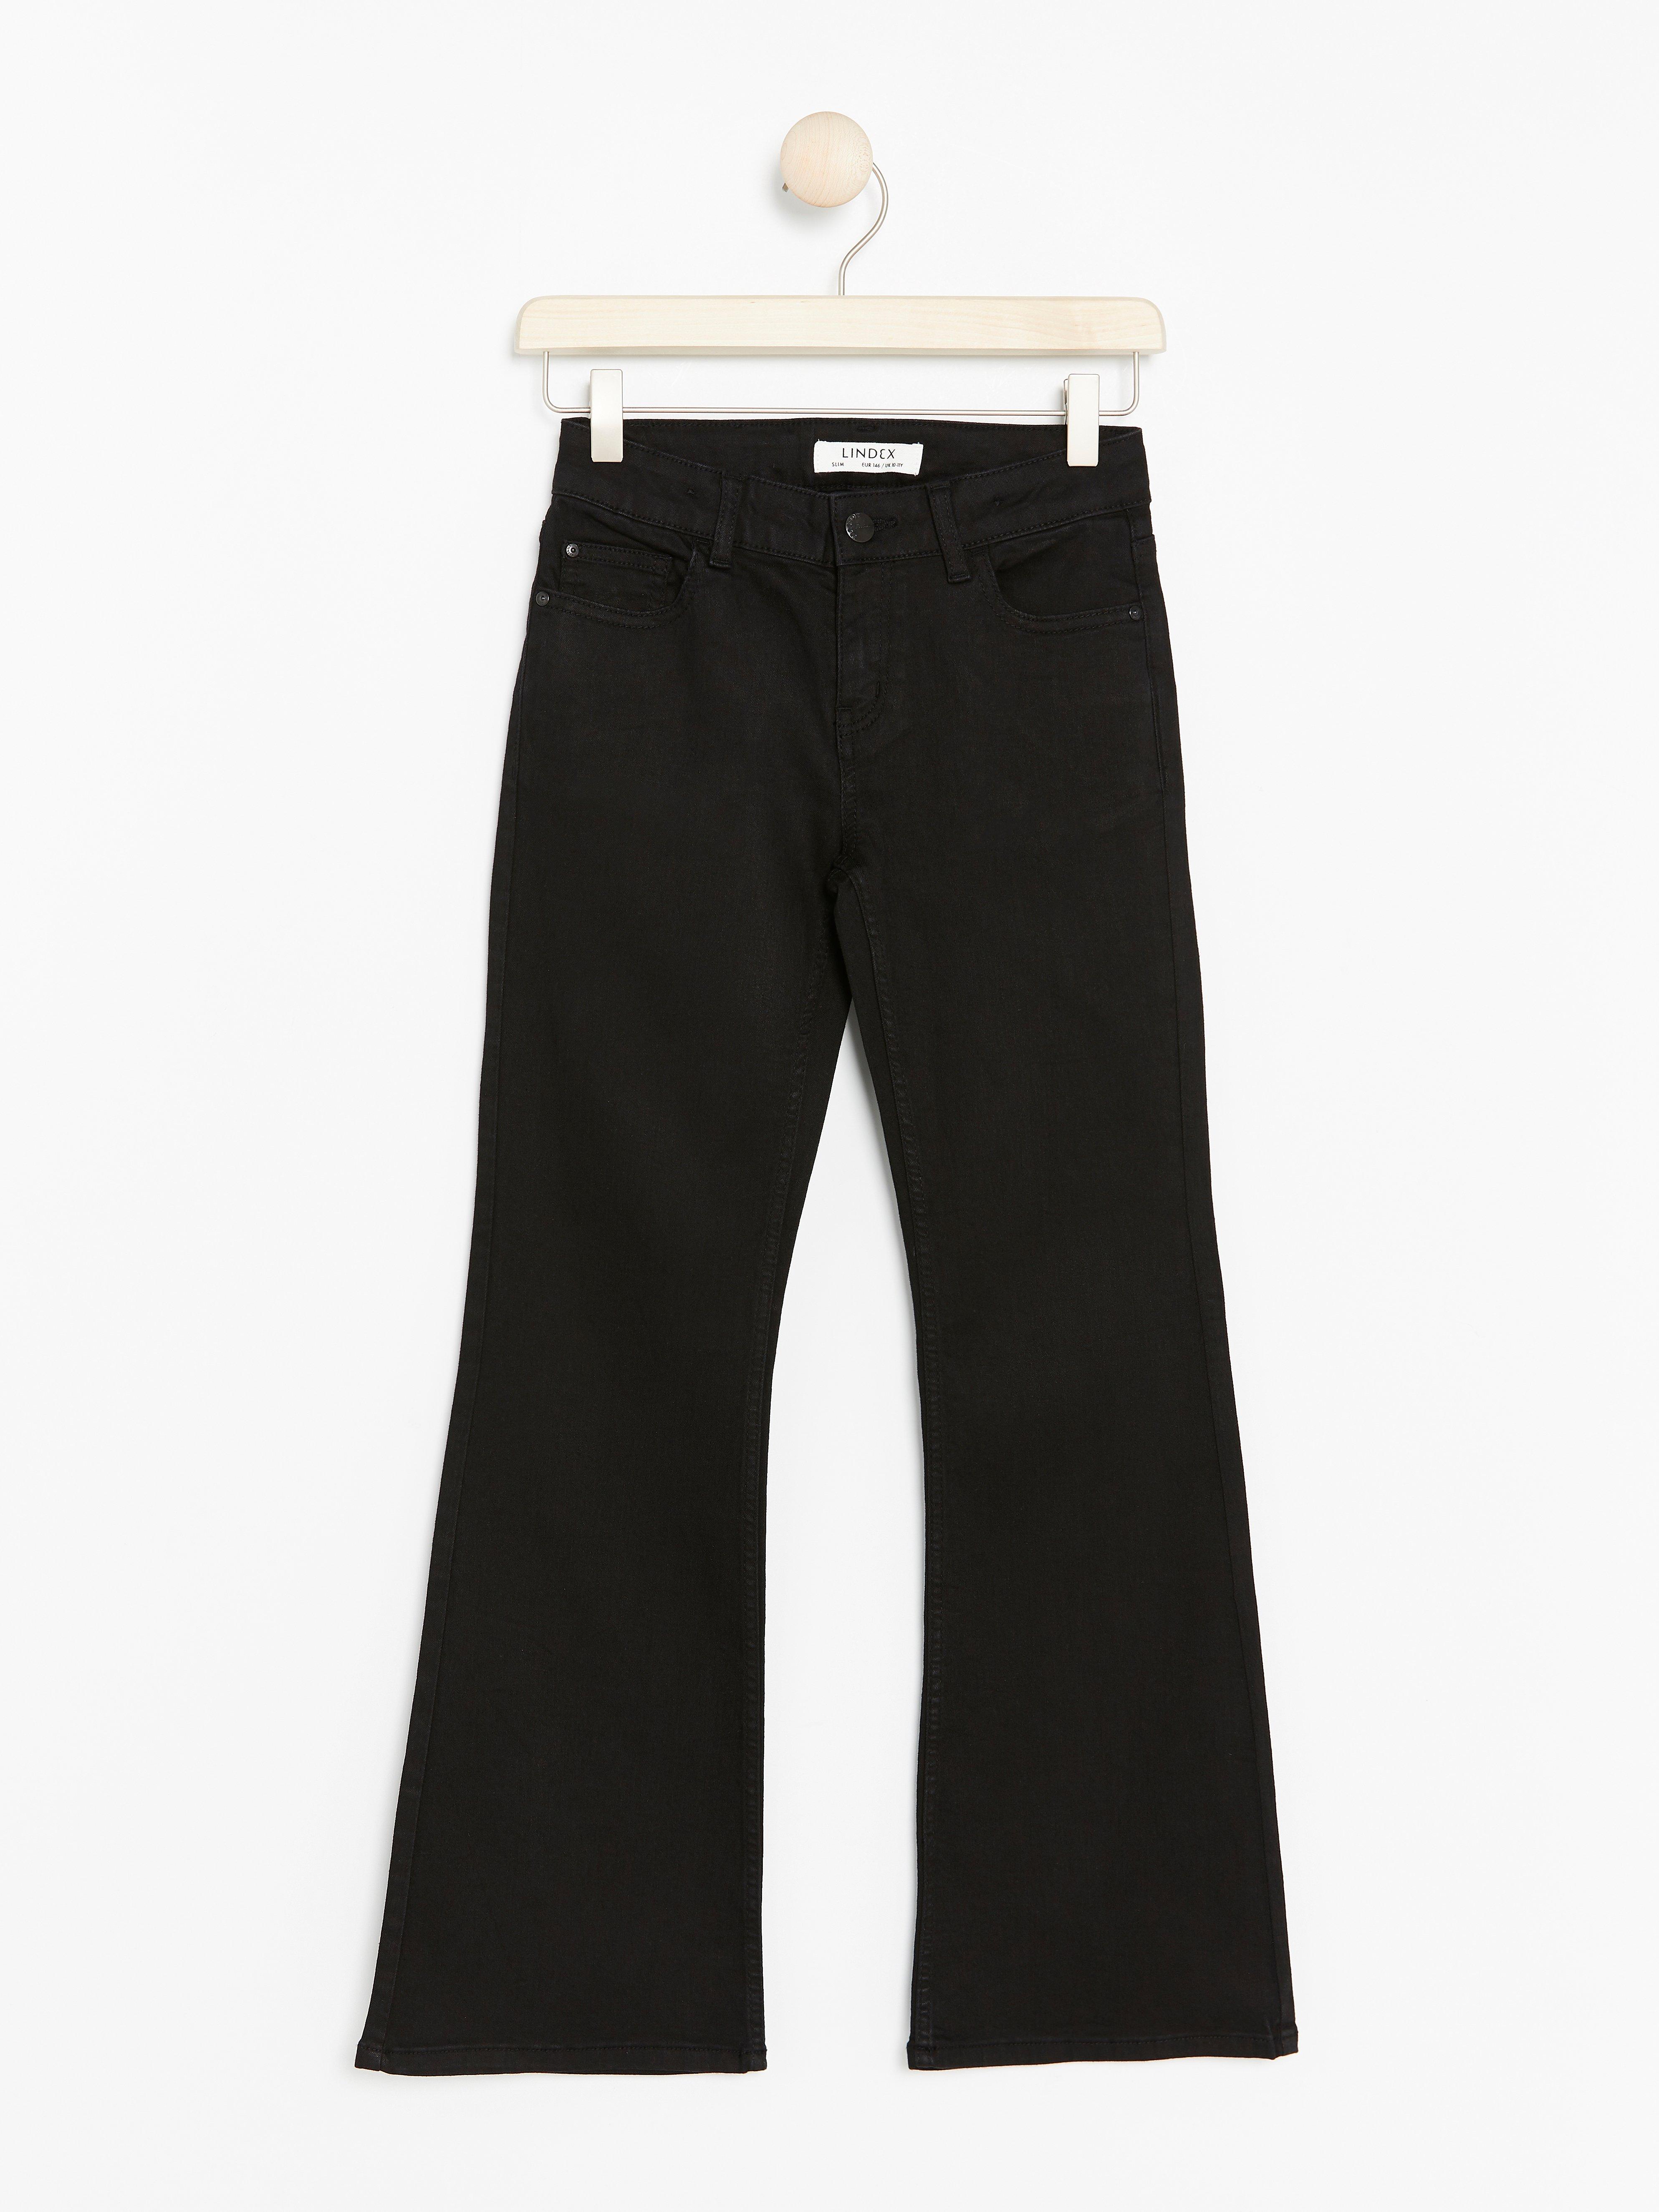 black slim fit bootcut jeans